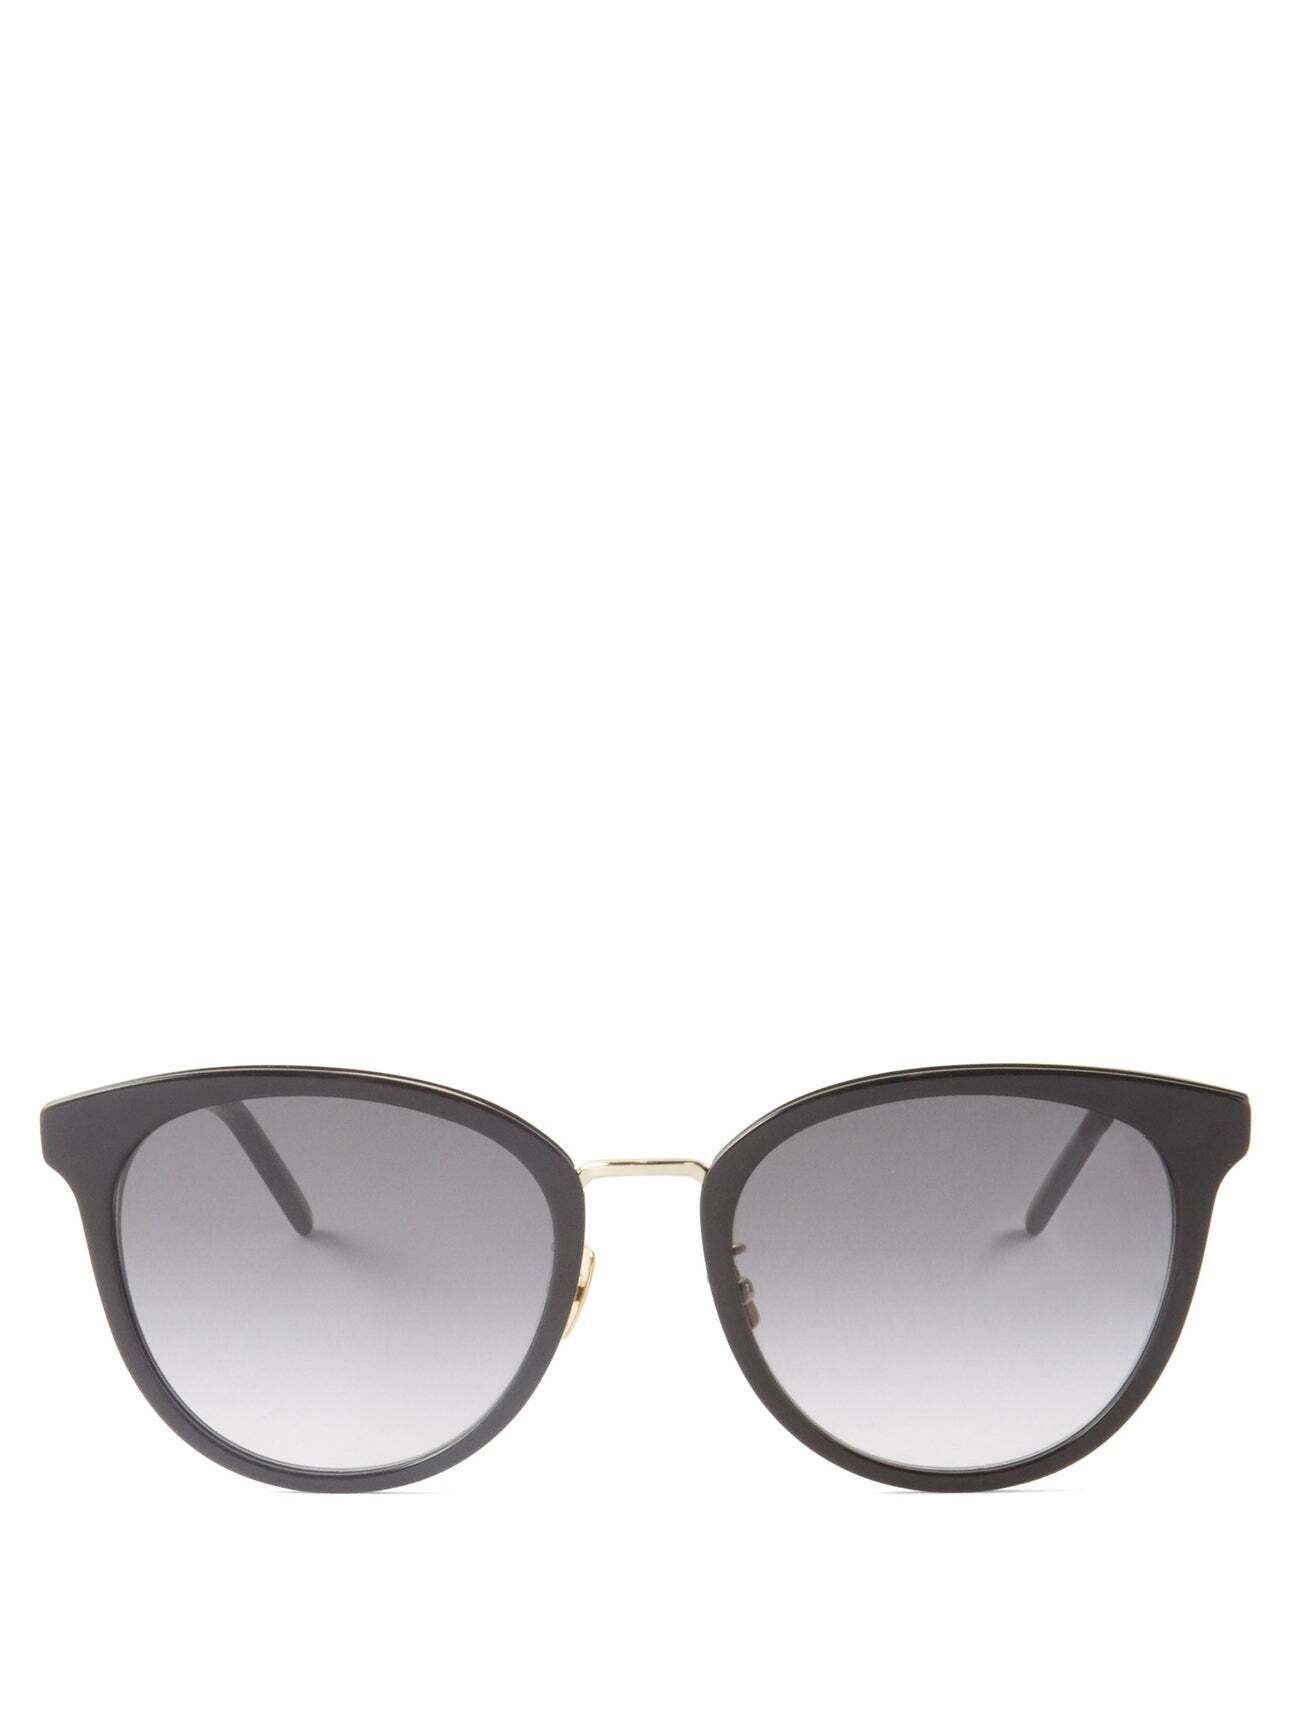 Saint Laurent - Cat-eye Acetate Sunglasses - Womens - Black